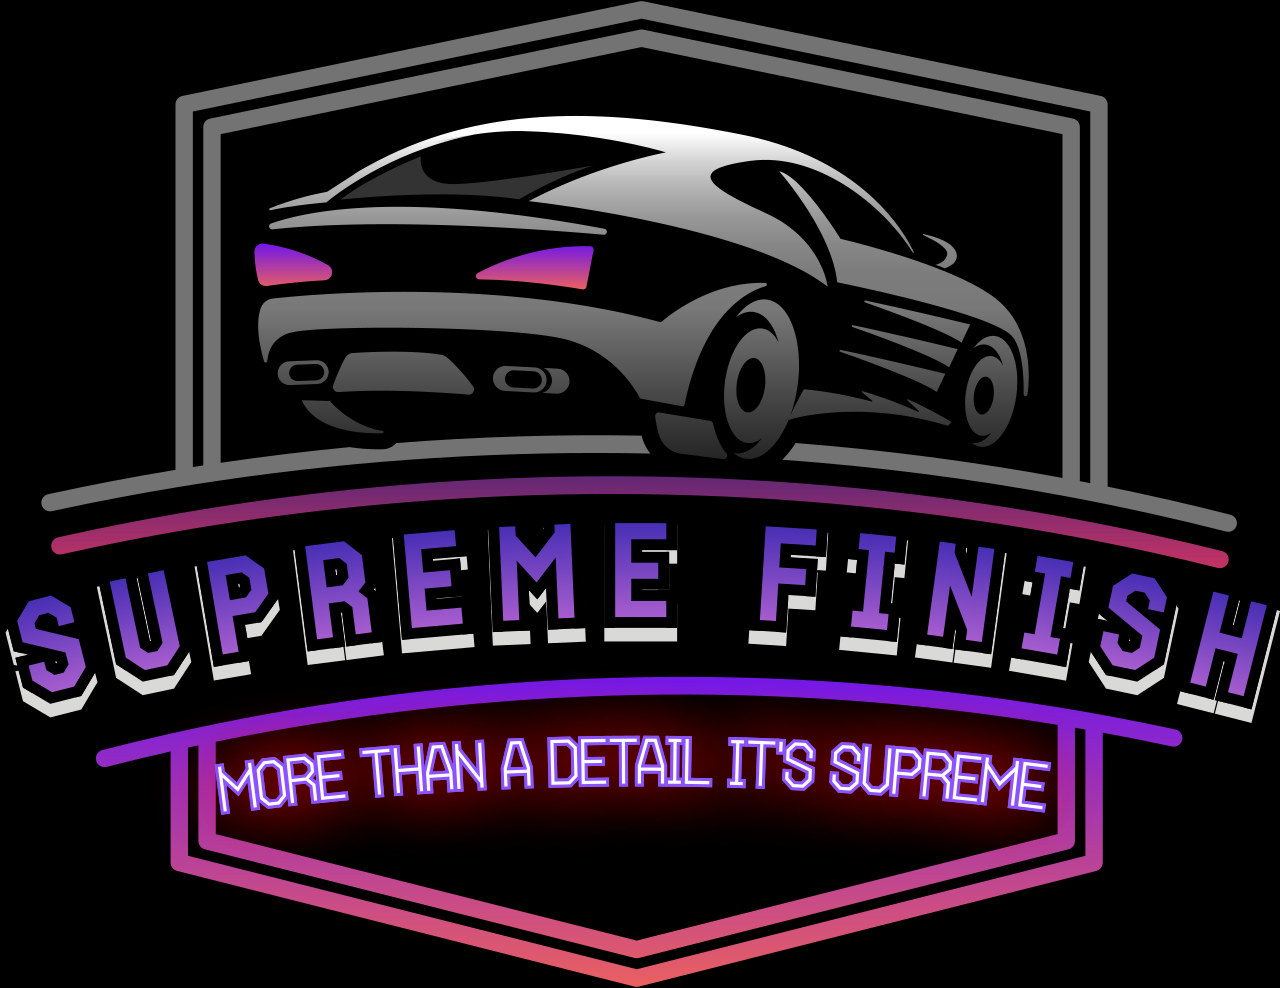 Supreme Finish's logo